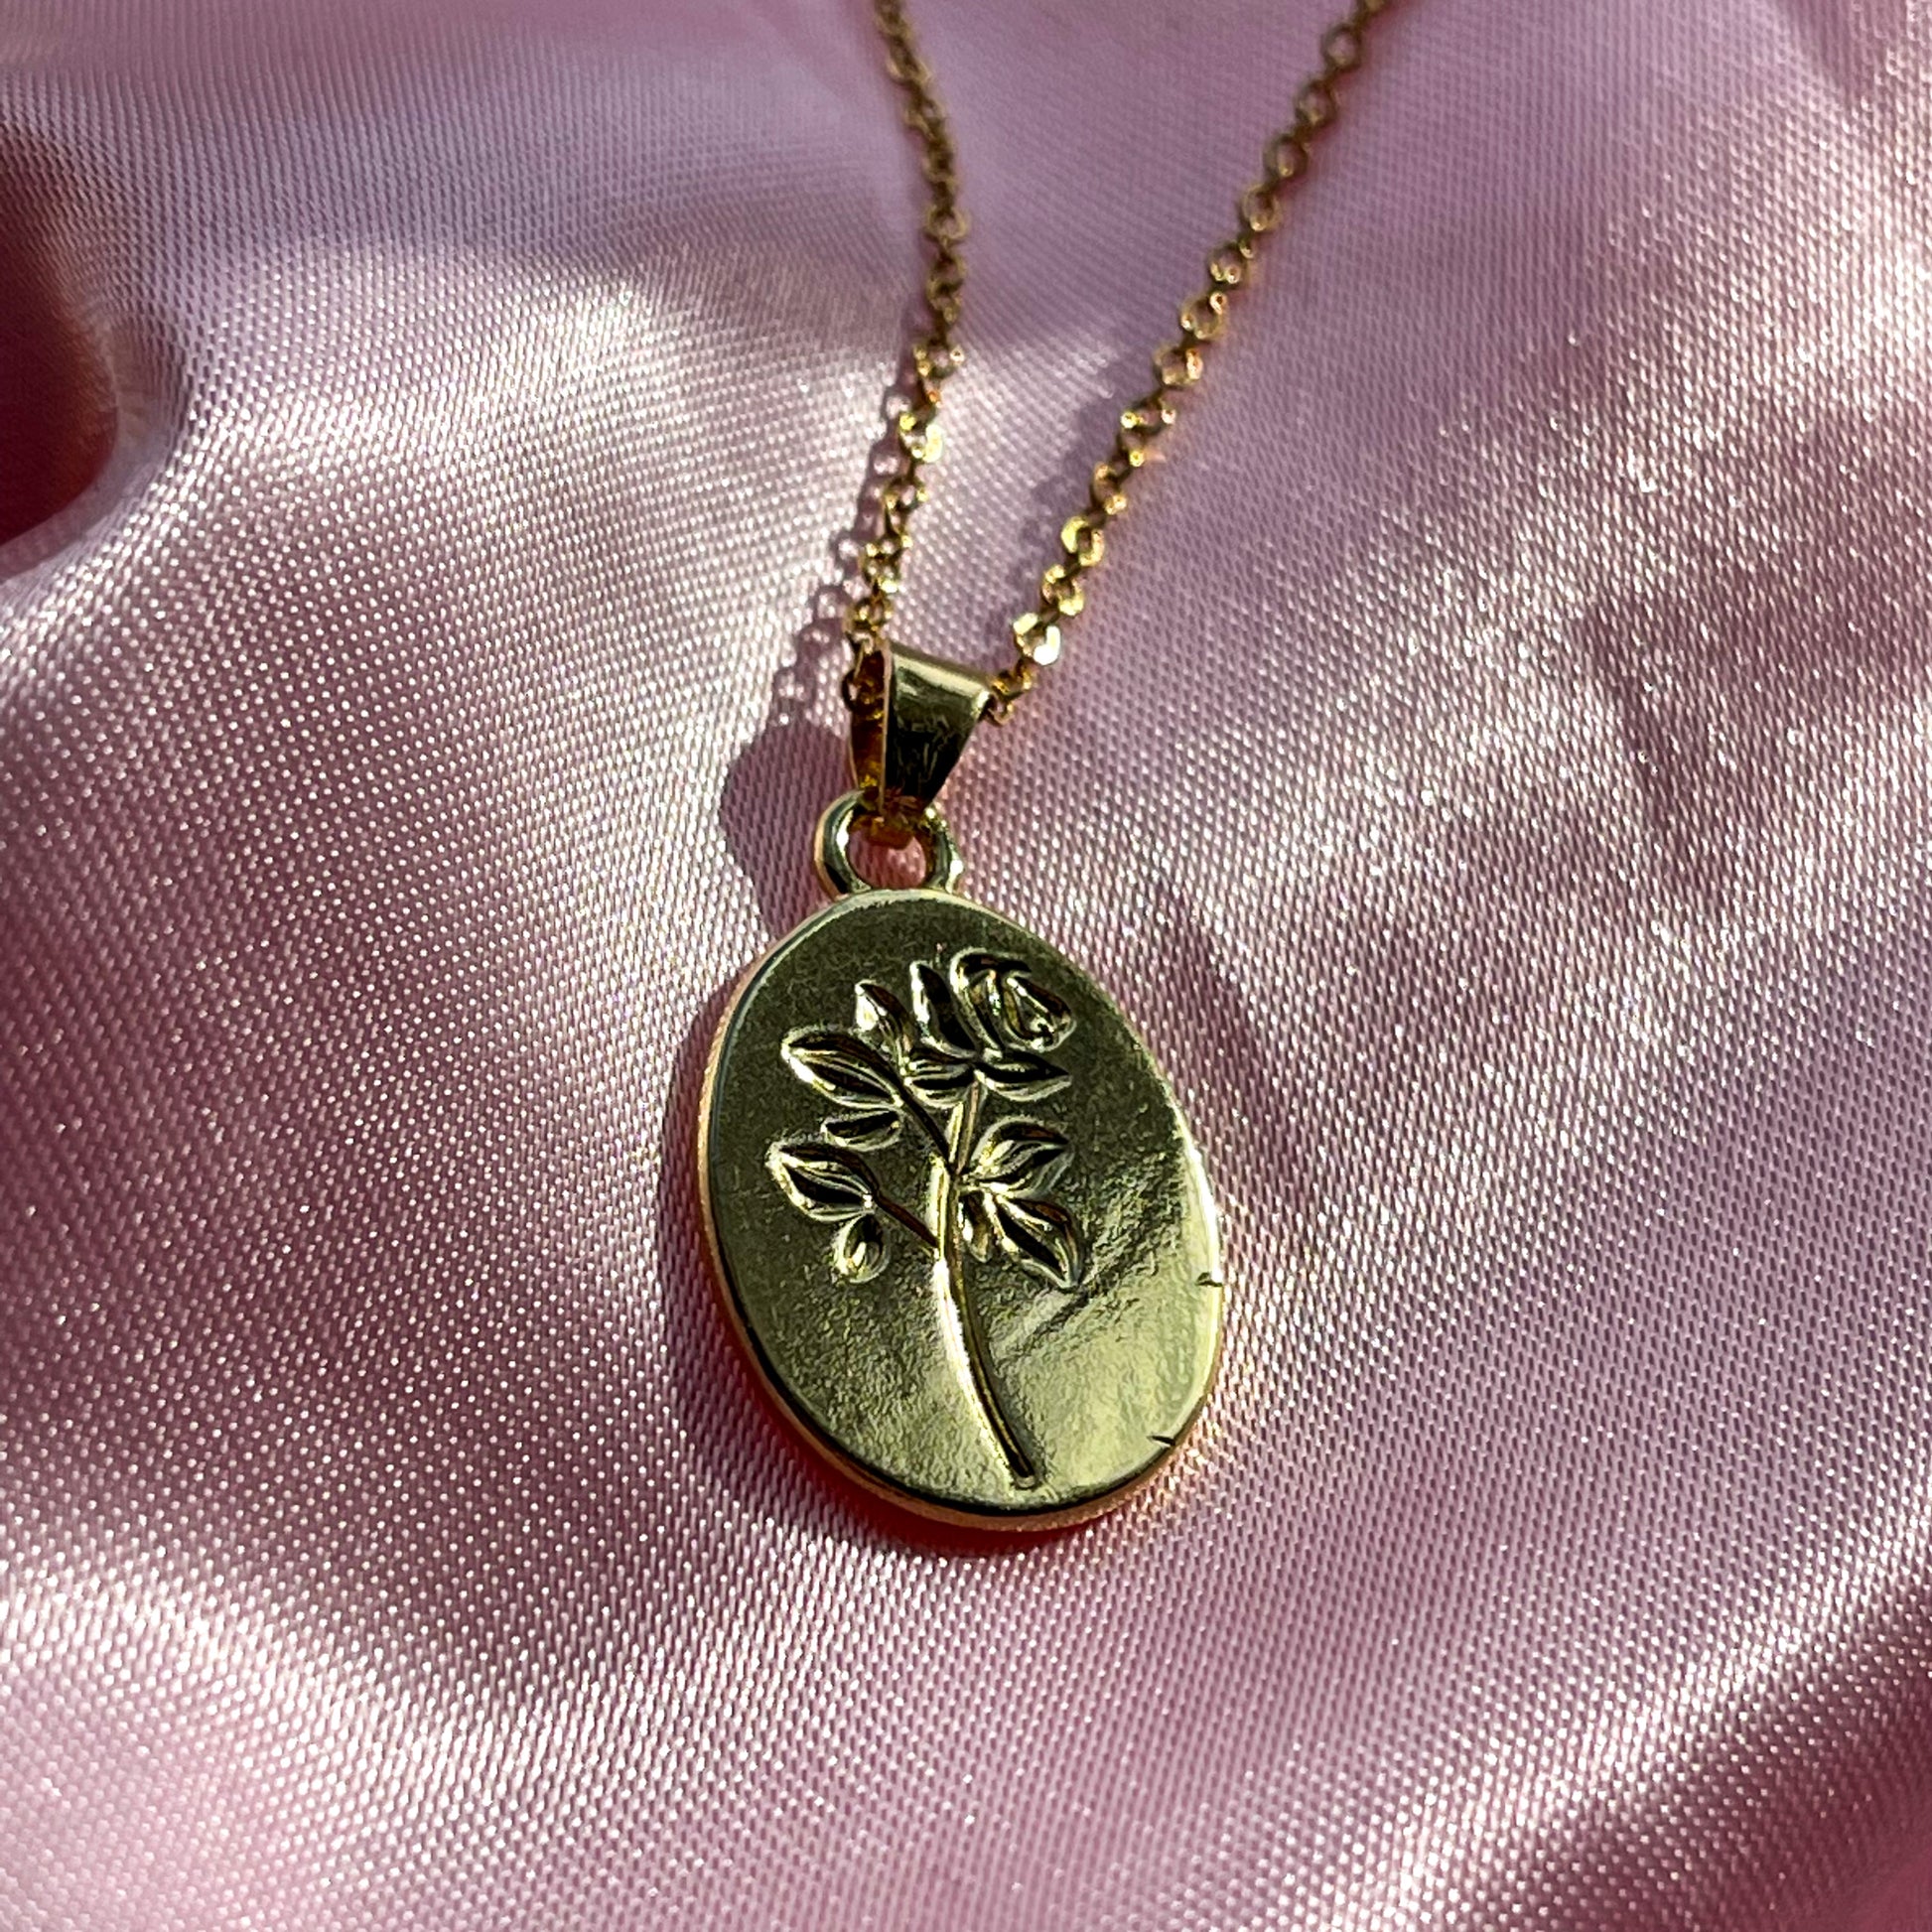 Delicate Rose Pendant Necklace - Lxyclr Authentic